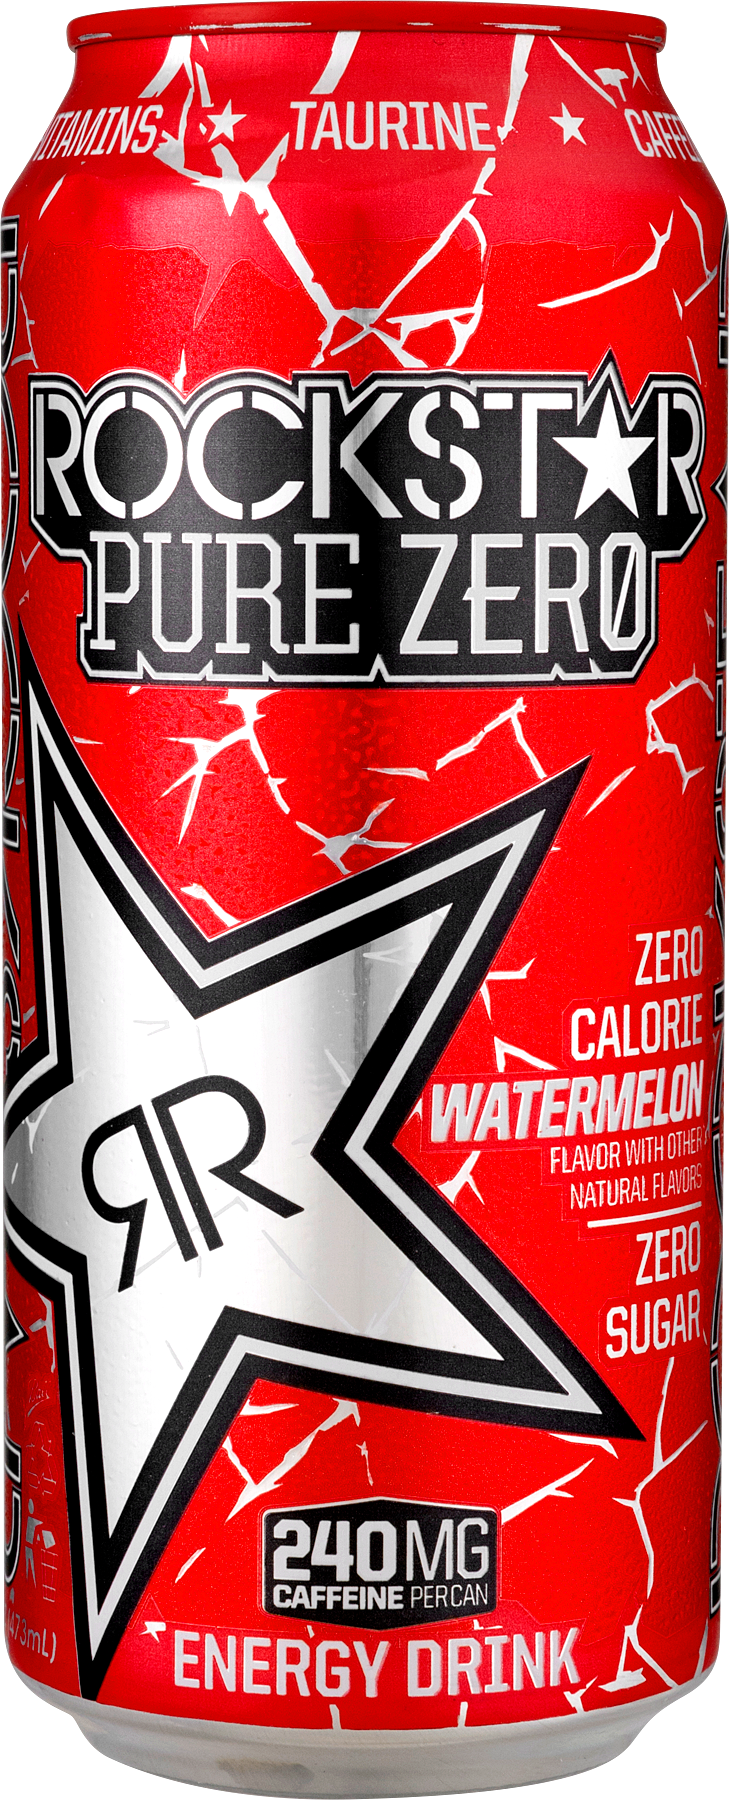 Rockstar Pure Zero Watermelon Energy Drink Can